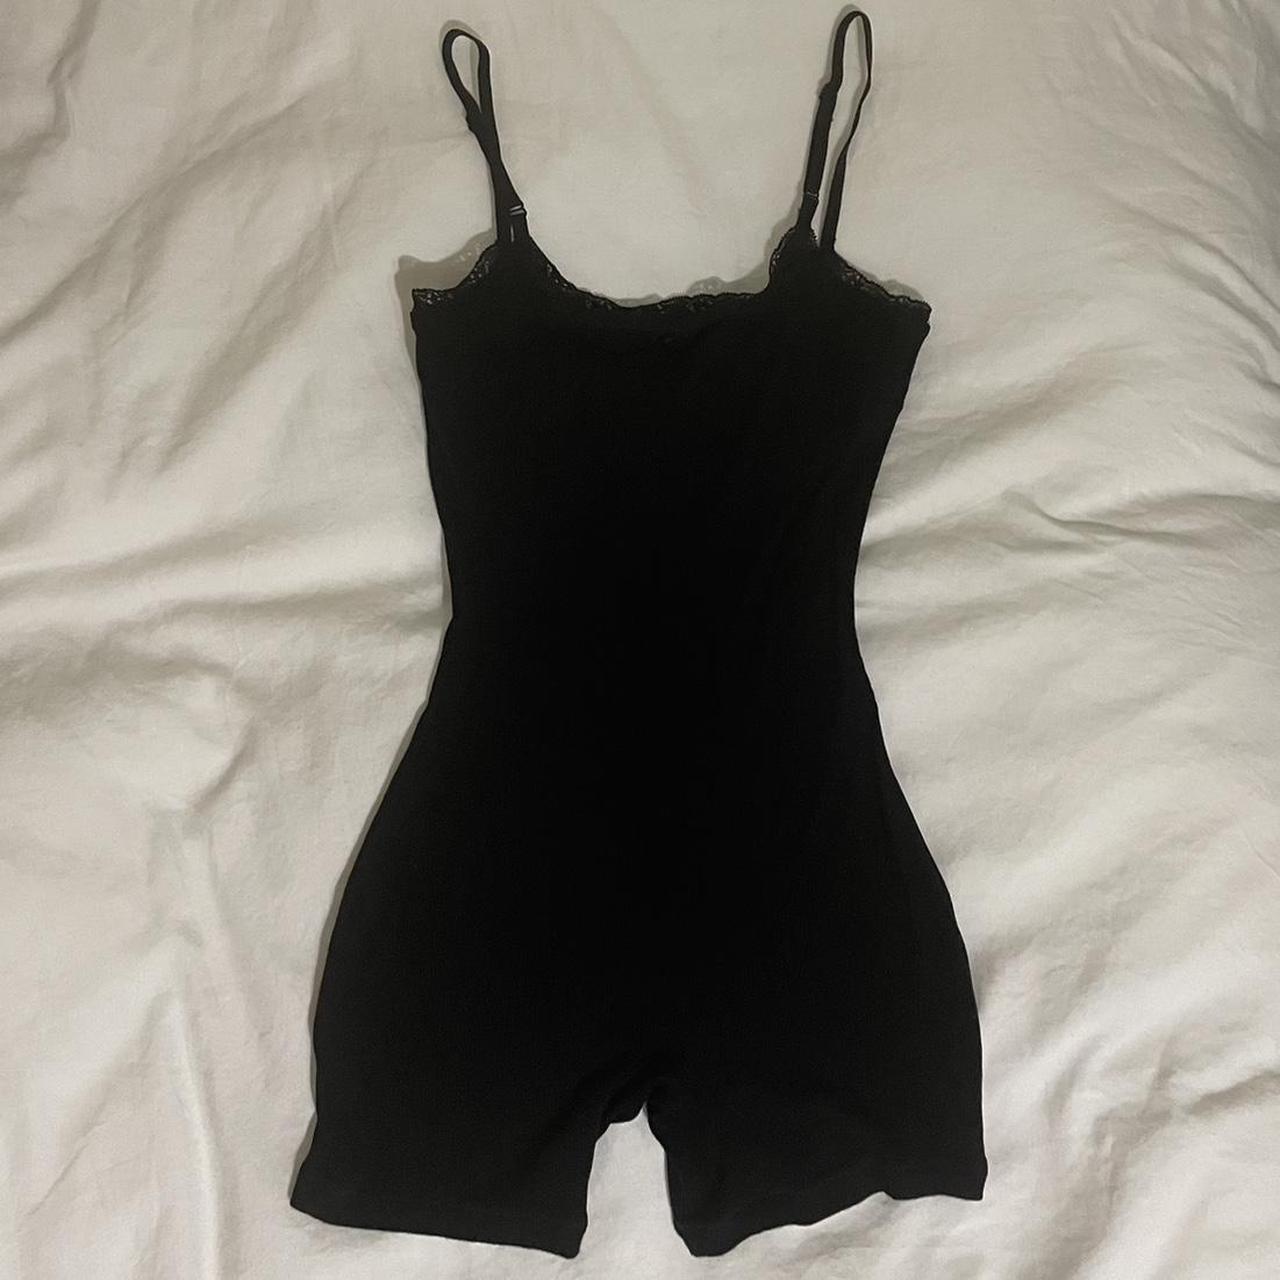 Money Print Bodysuit Details : A bodysuit / onesie - Depop